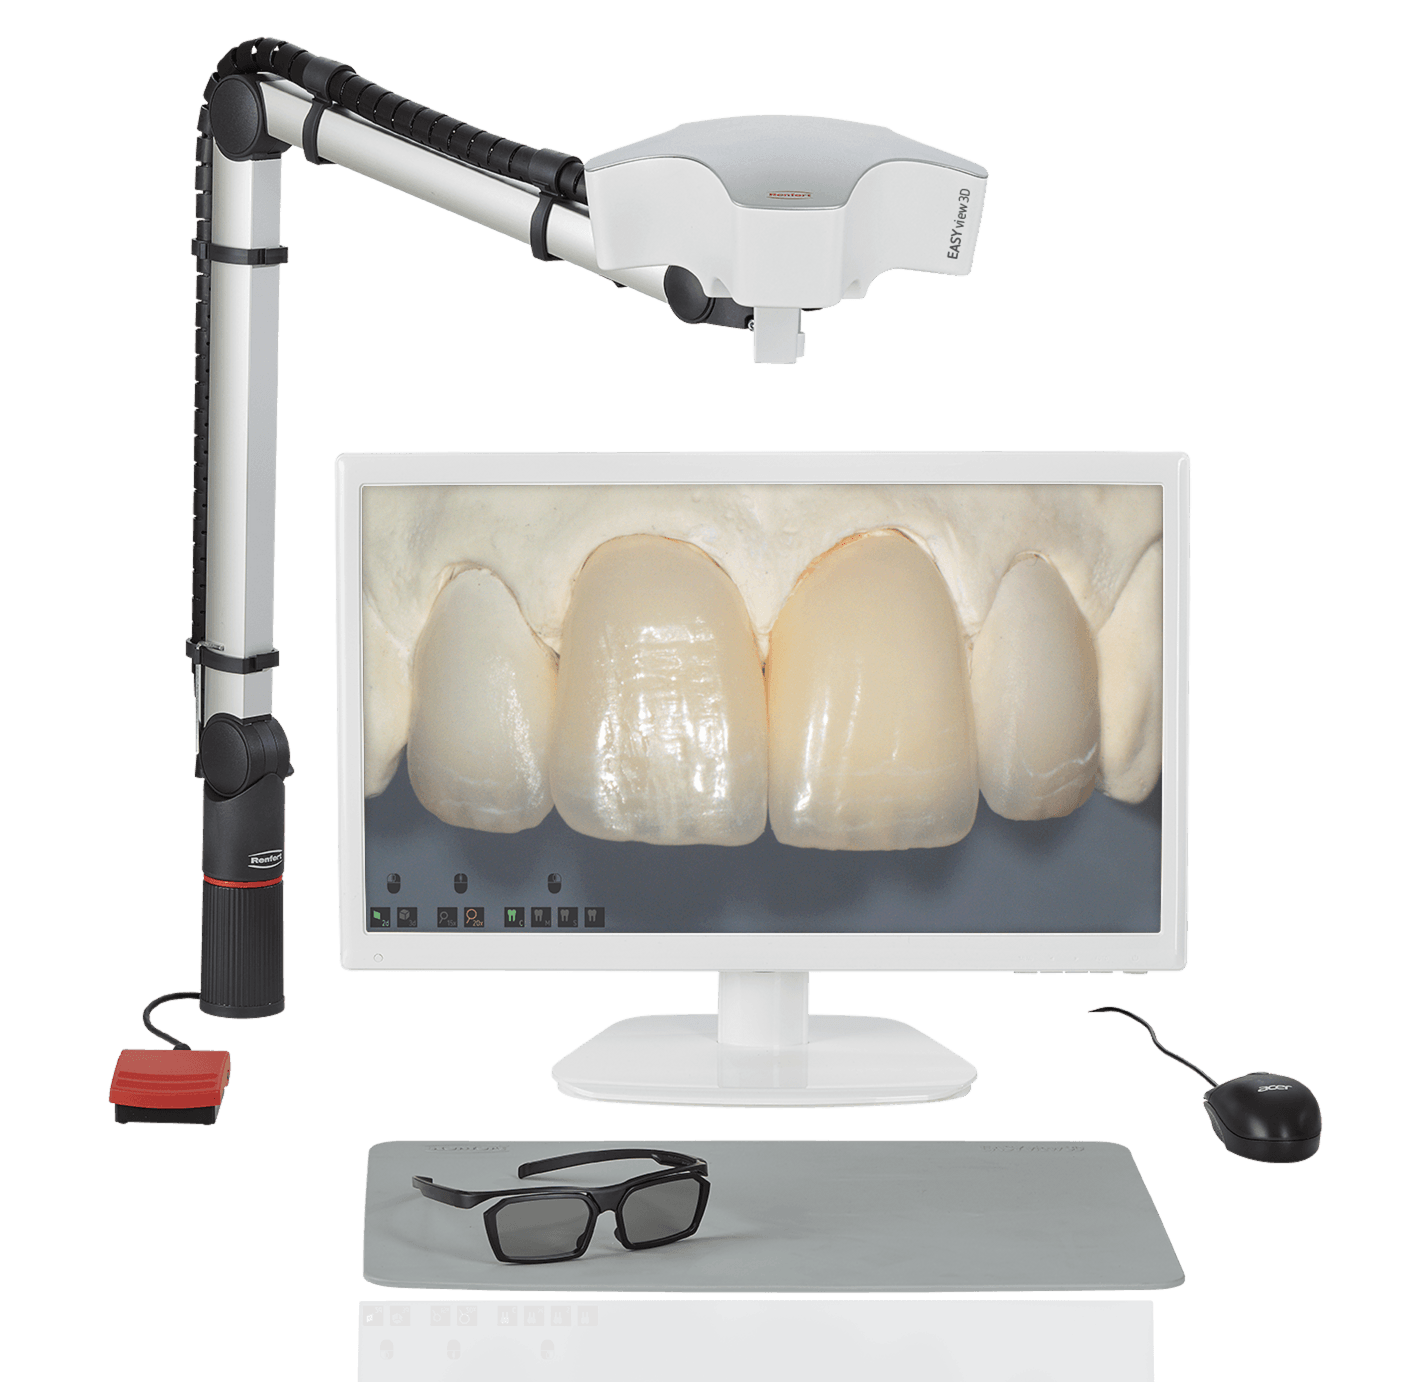 EASY view 3D Dental Viewer from Renfert: a novel video microscope with 3D technology